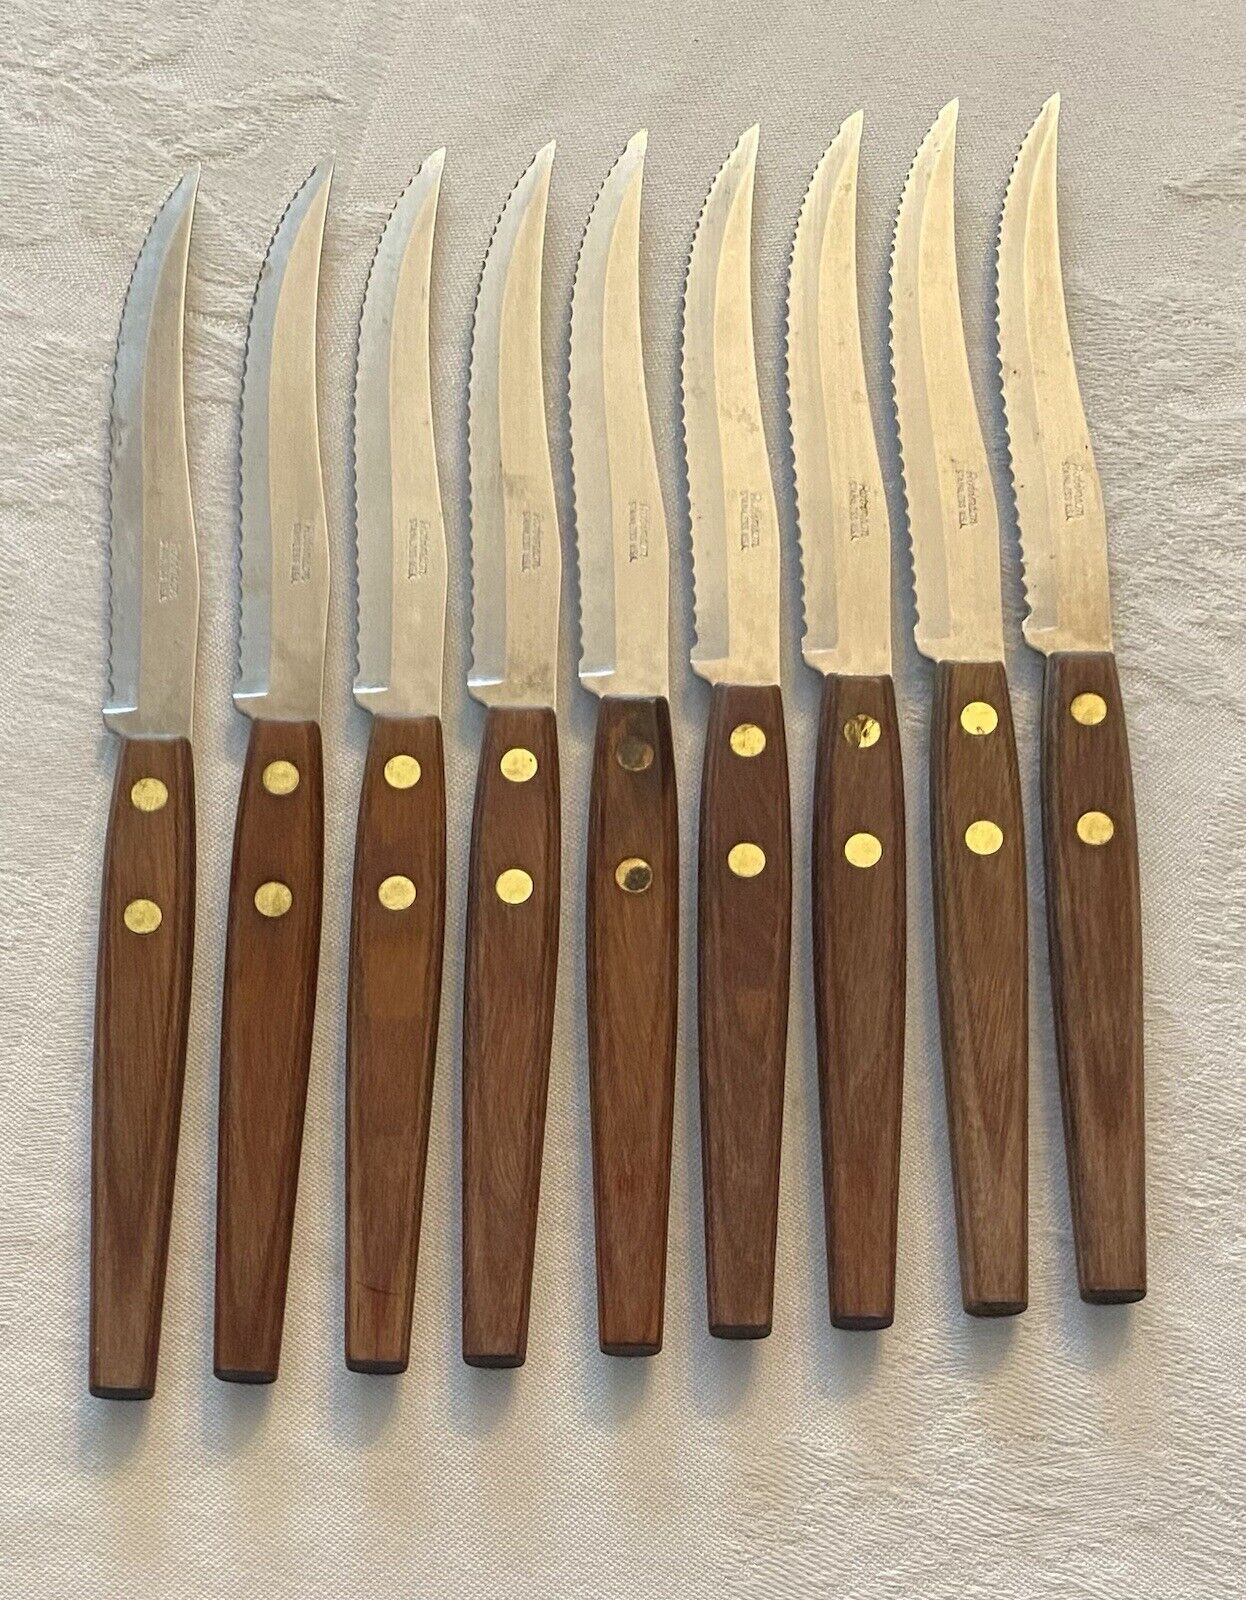 Vintage Robinson Stainless Blade Wood Handle Steak Knives Brass Rivet Set Of 9